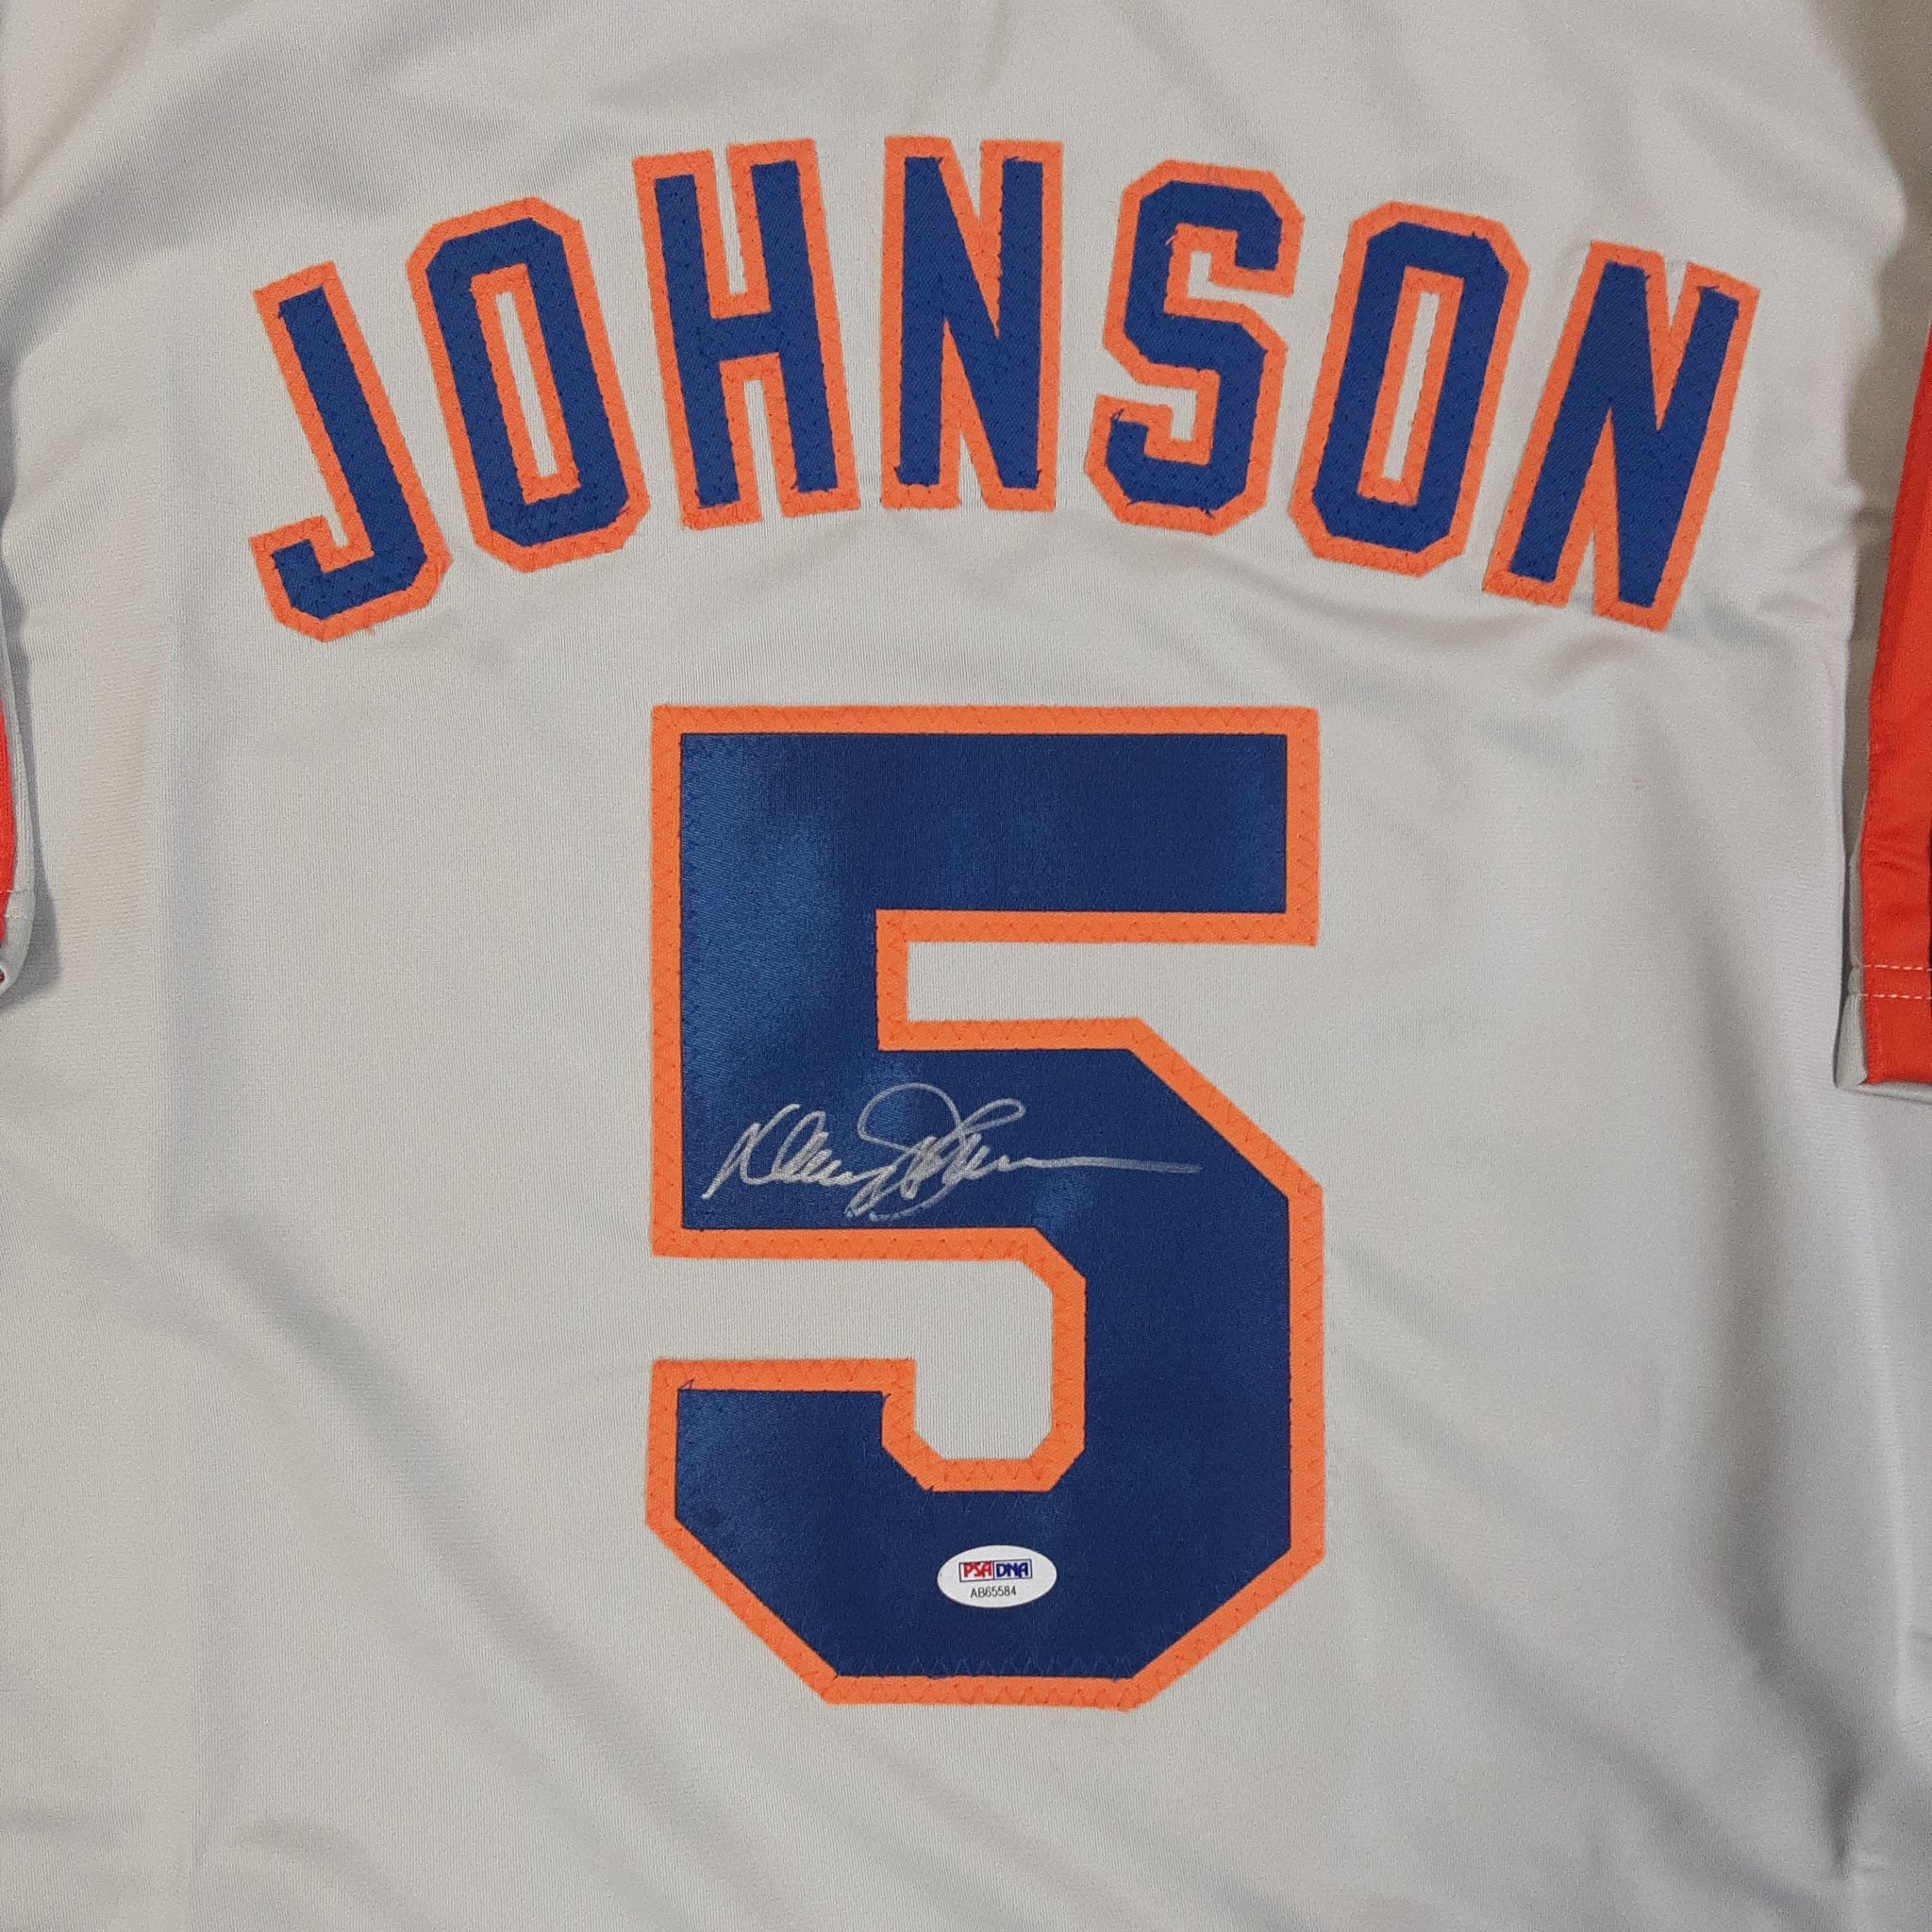 Davey Johnson Authentic Signed Pro Style Jersey Autographed PSA